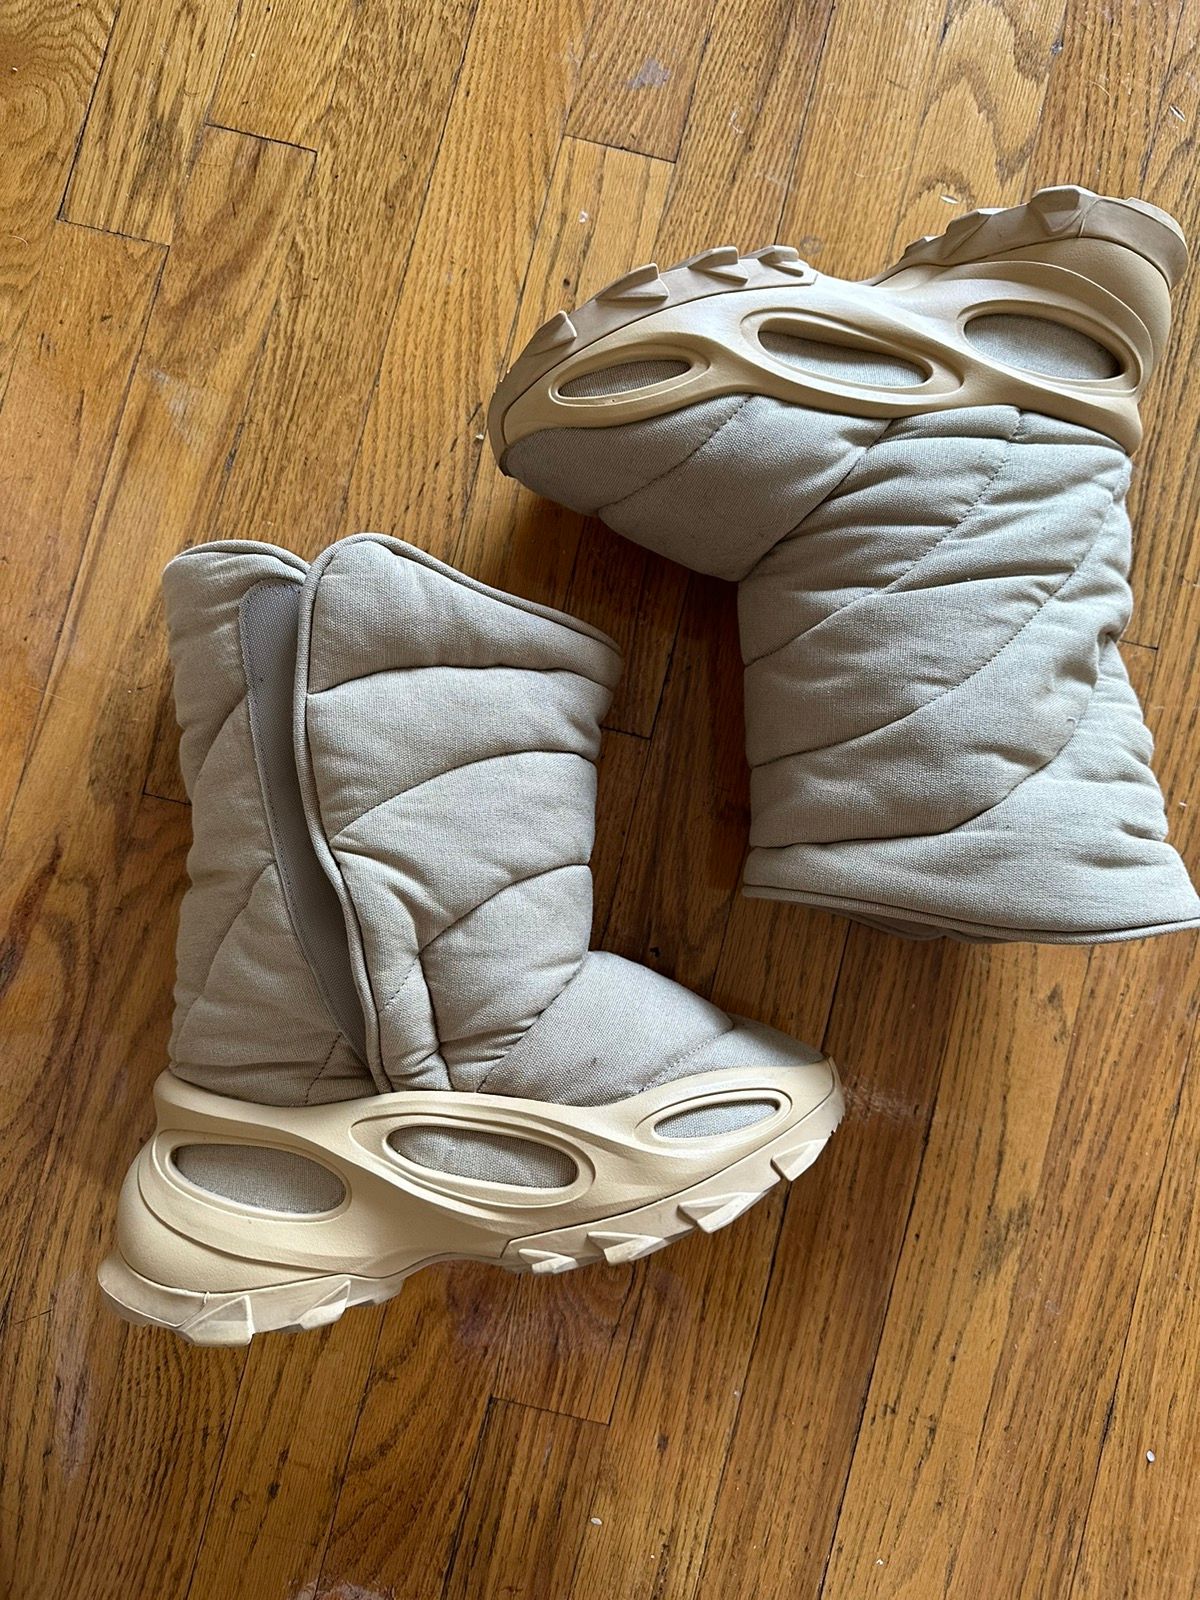 Adidas Yeezy NSLTD Boots | Grailed